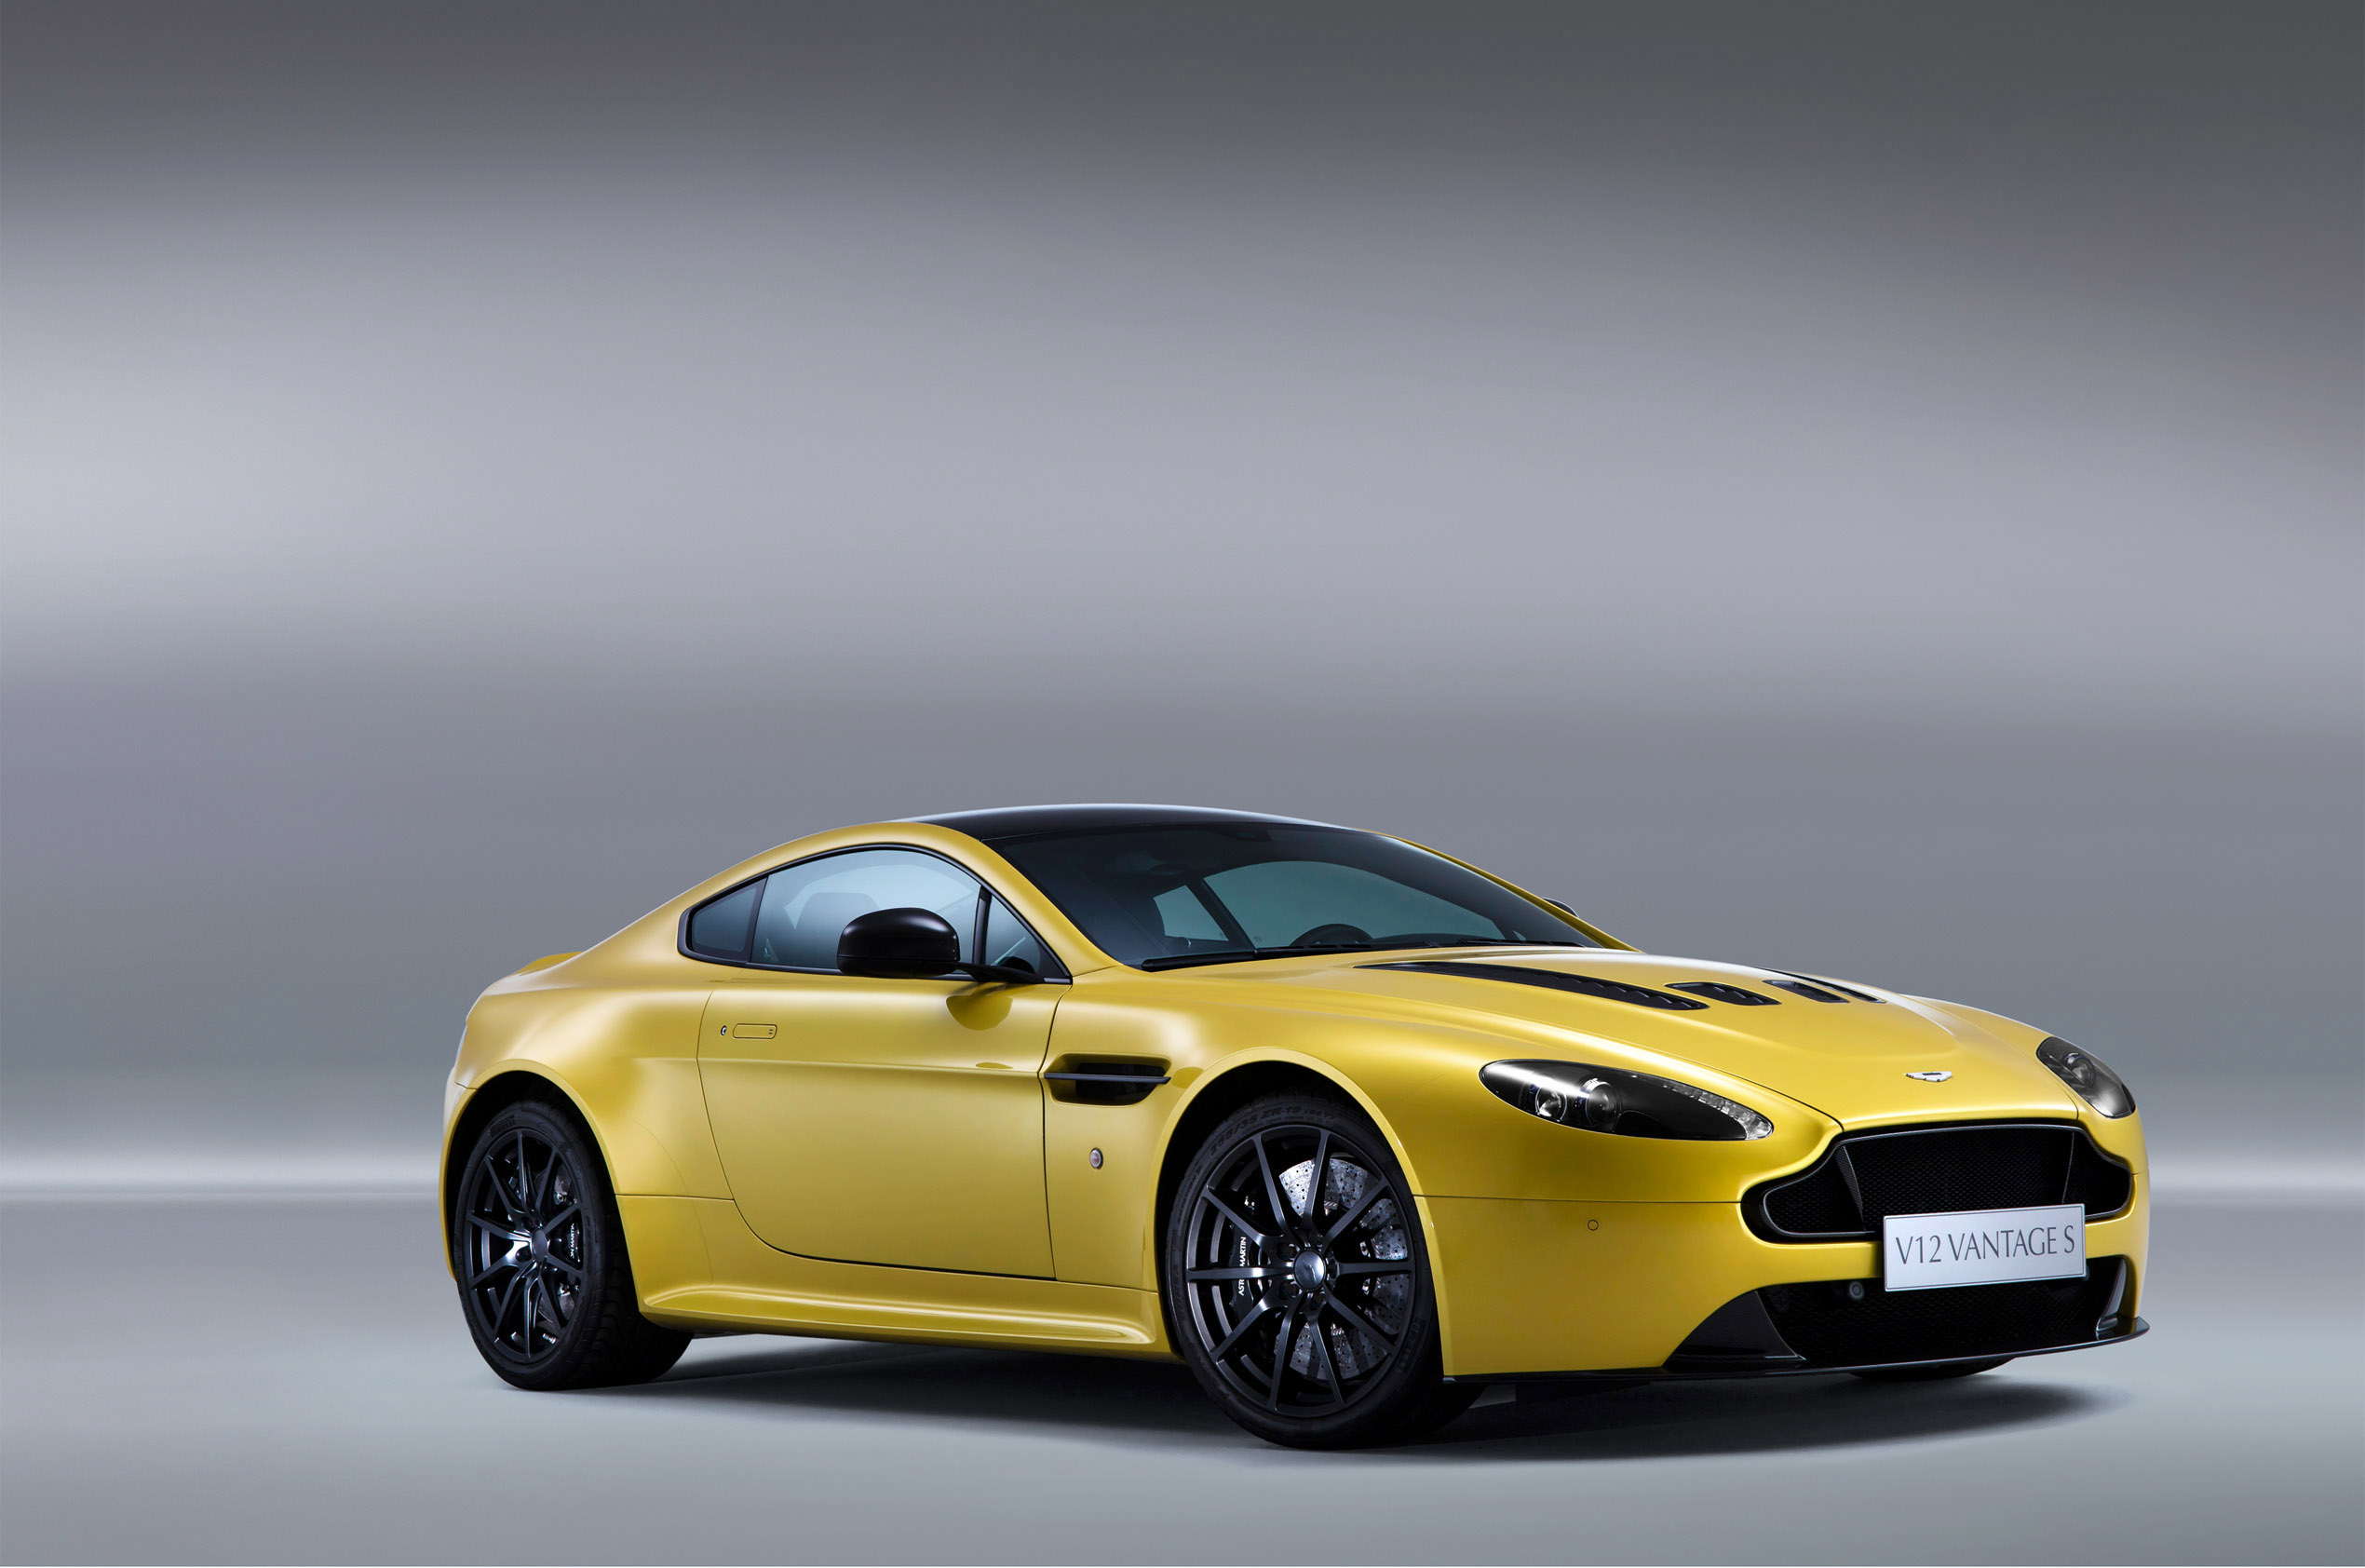 2014 Aston Martin V12 Vantage S Backgrounds on Wallpapers Vista